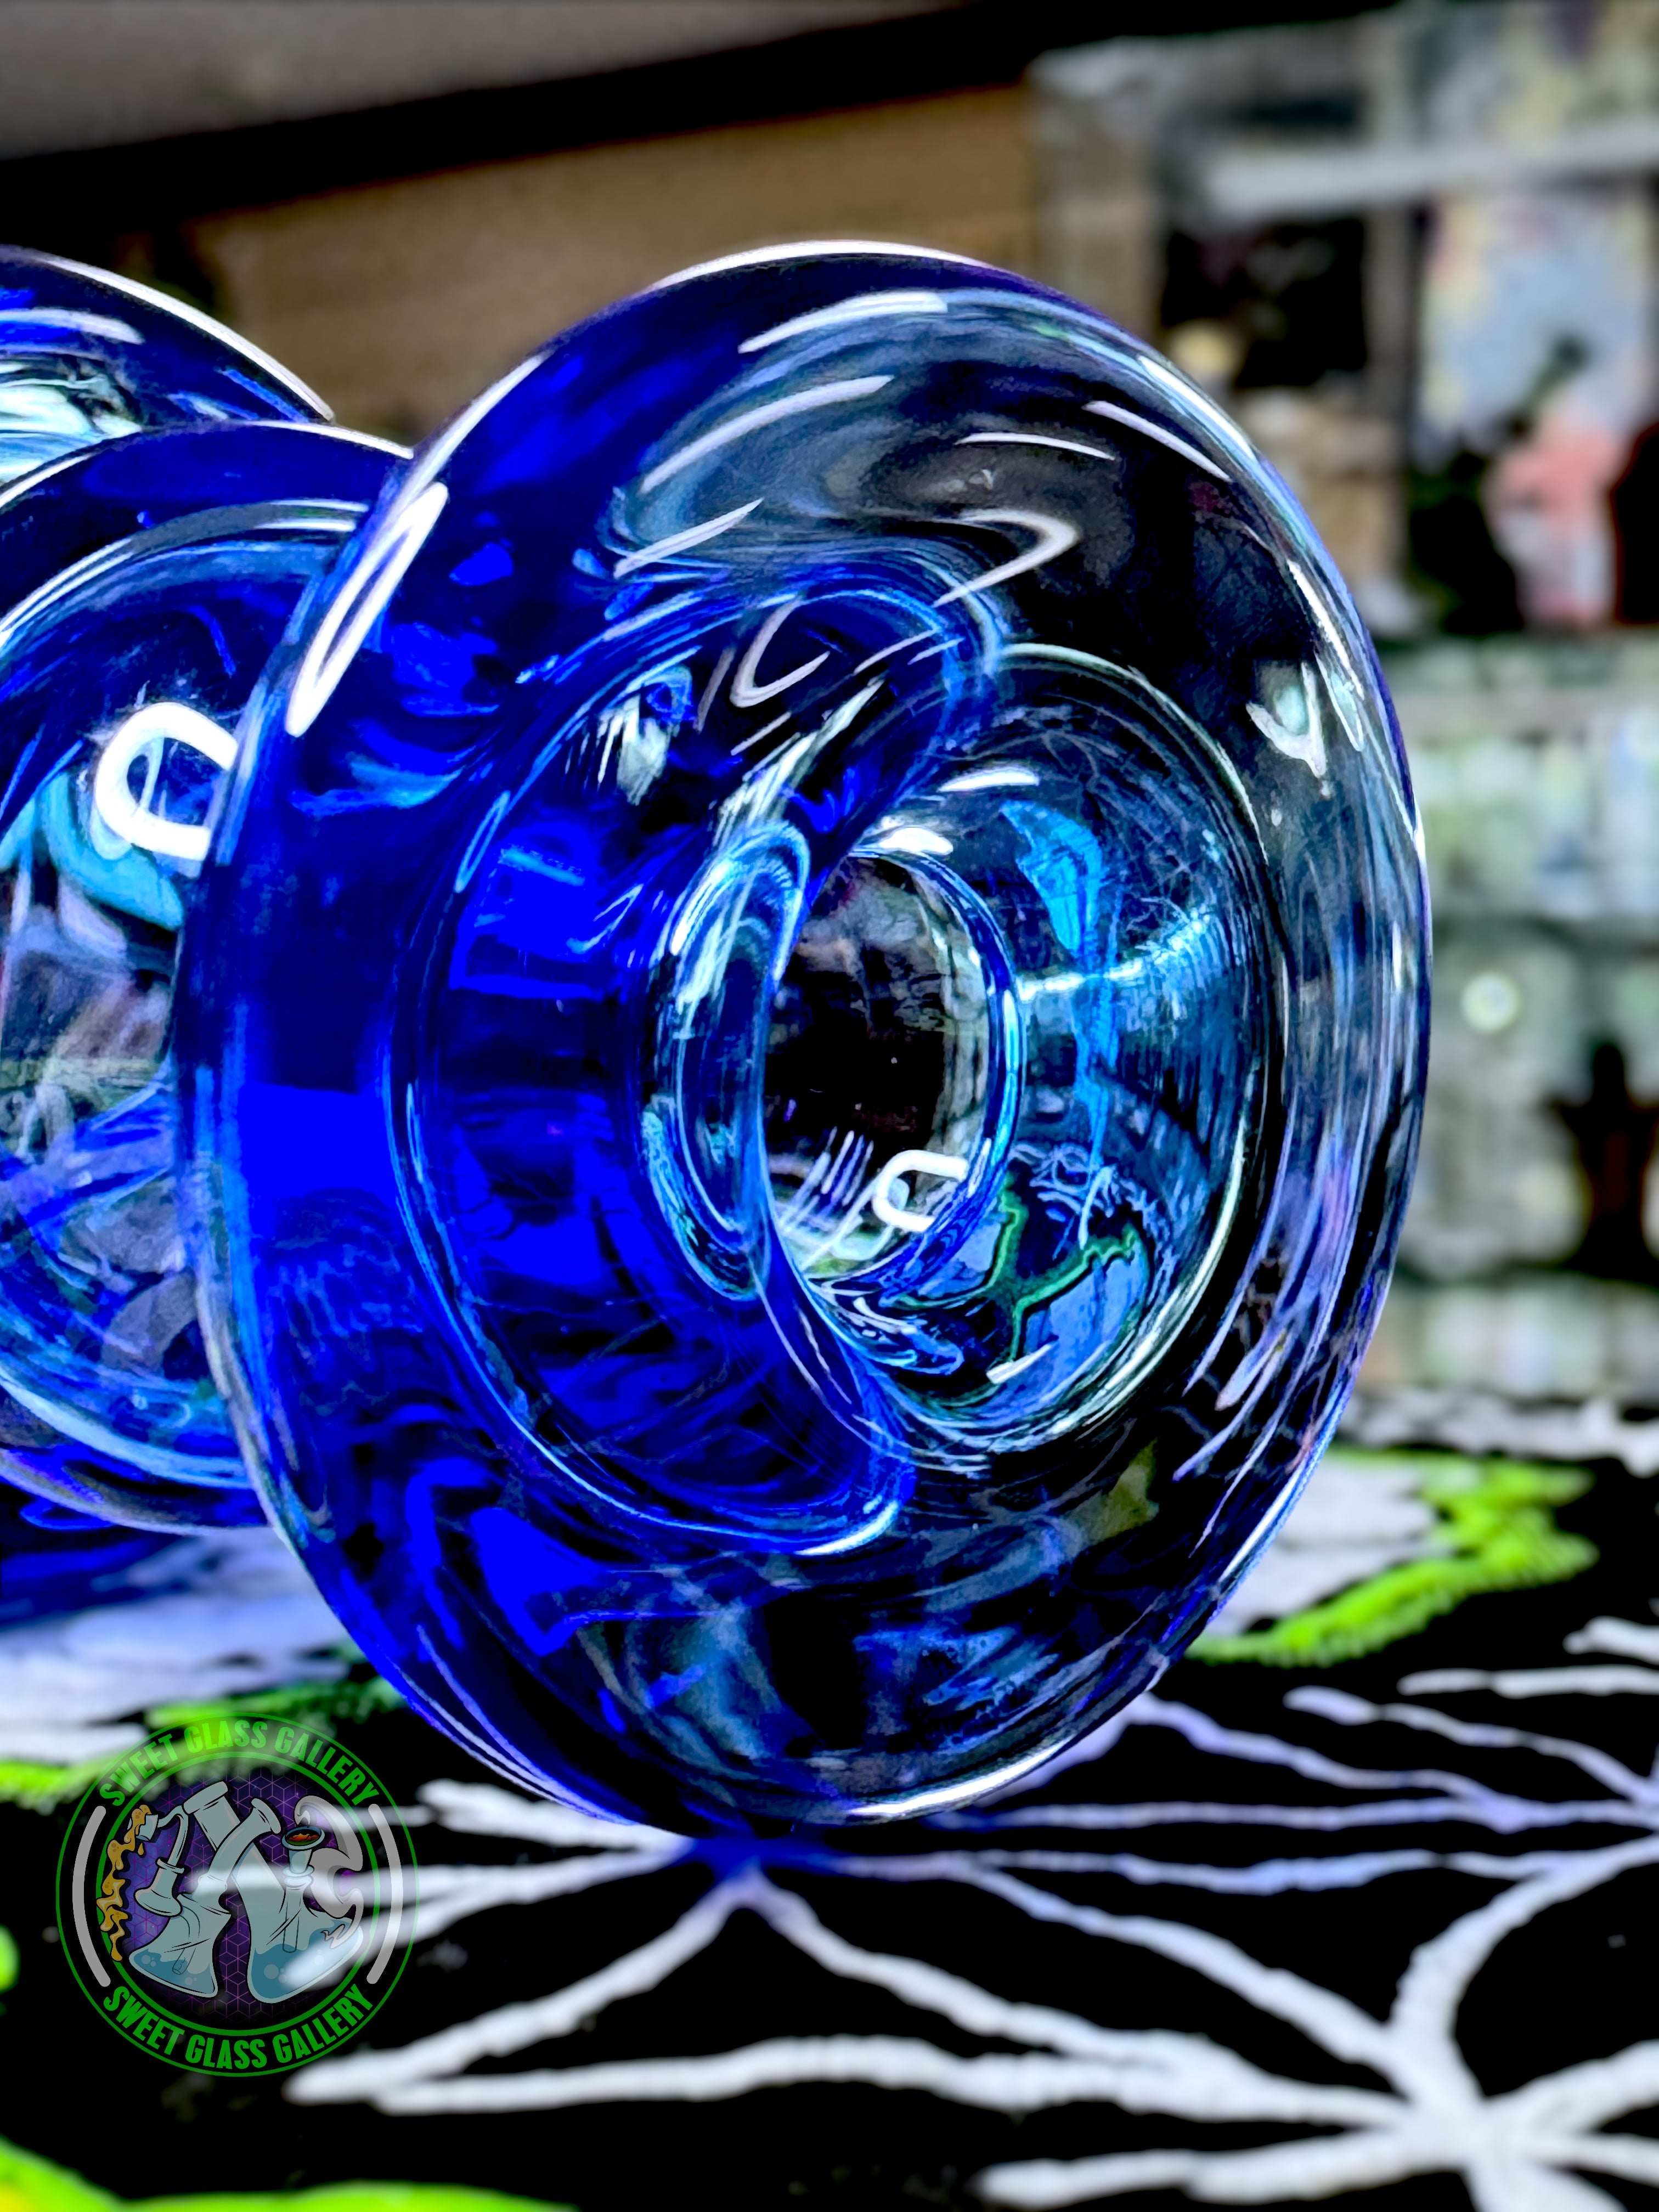 Evol Glass - Dry Puffco Attachment - Blue